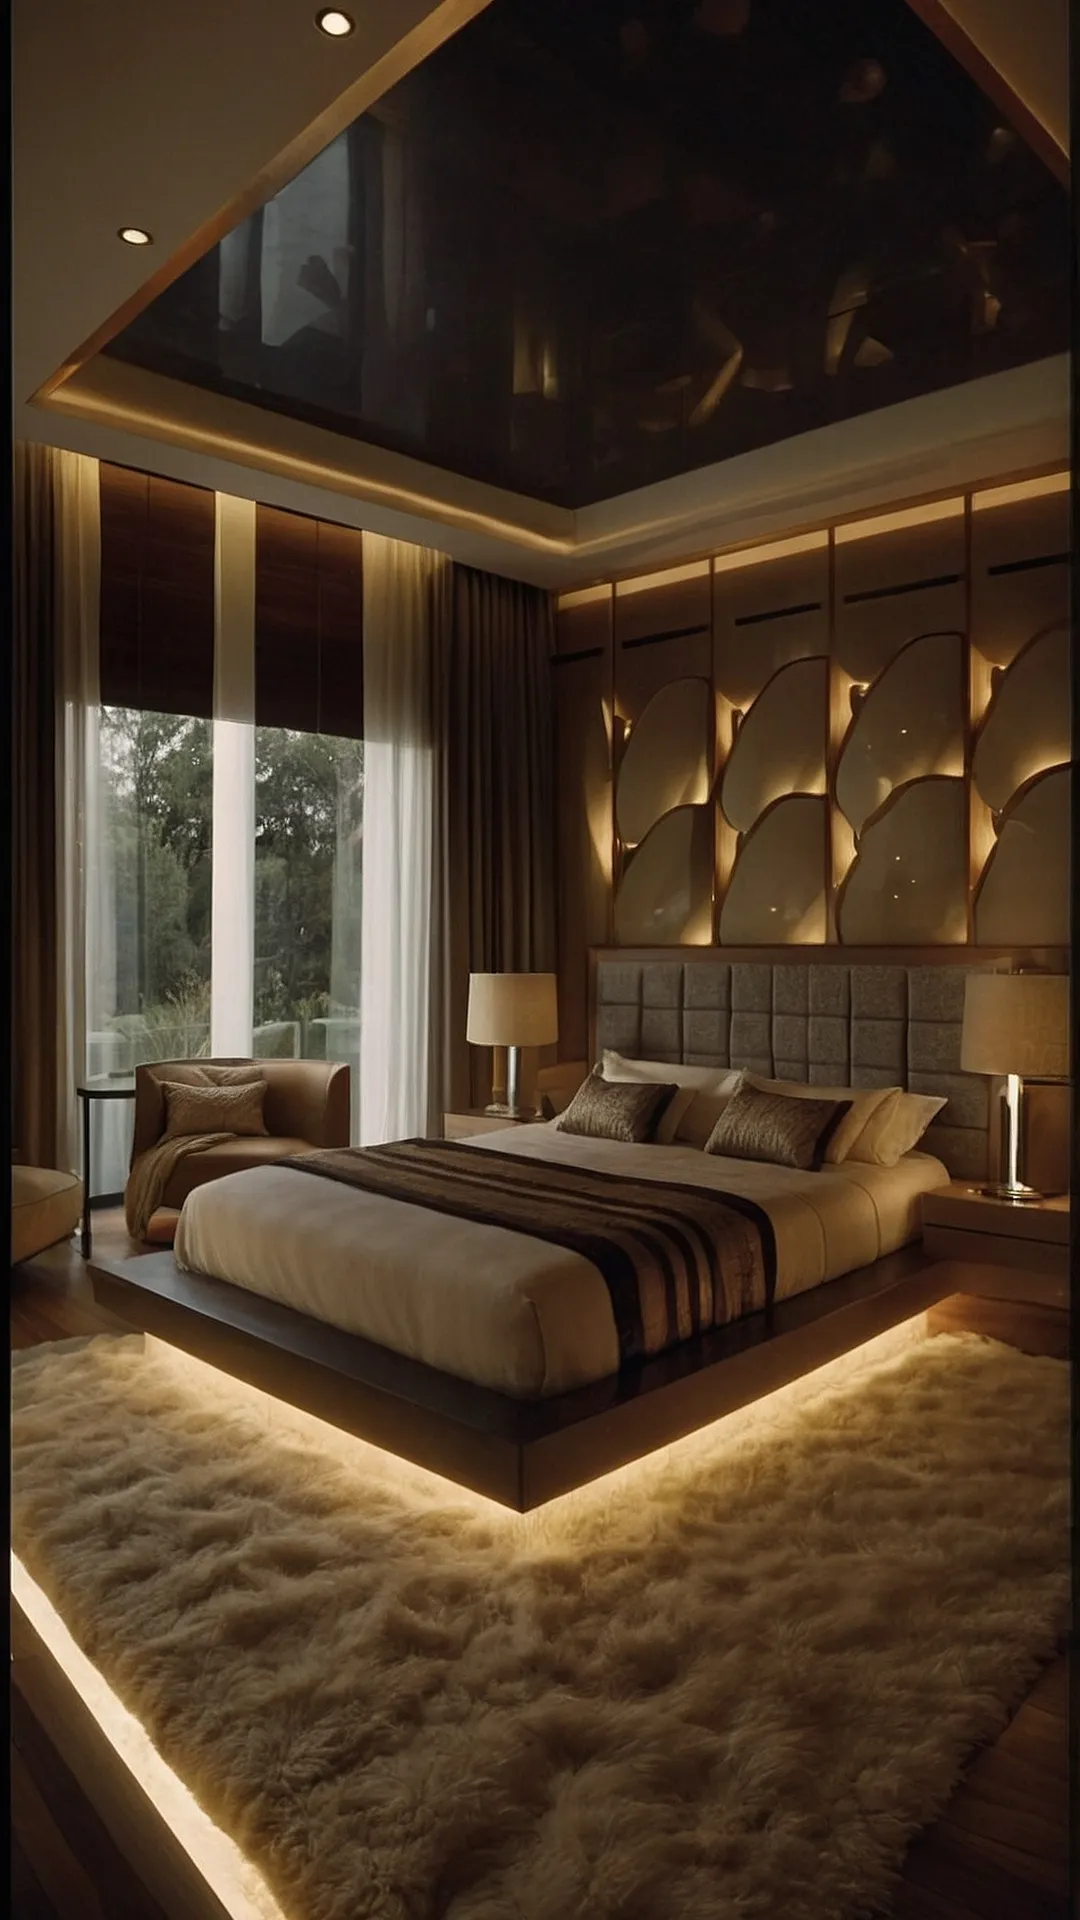 Sophisticated Slumber: Classy Bedroom Inspirations